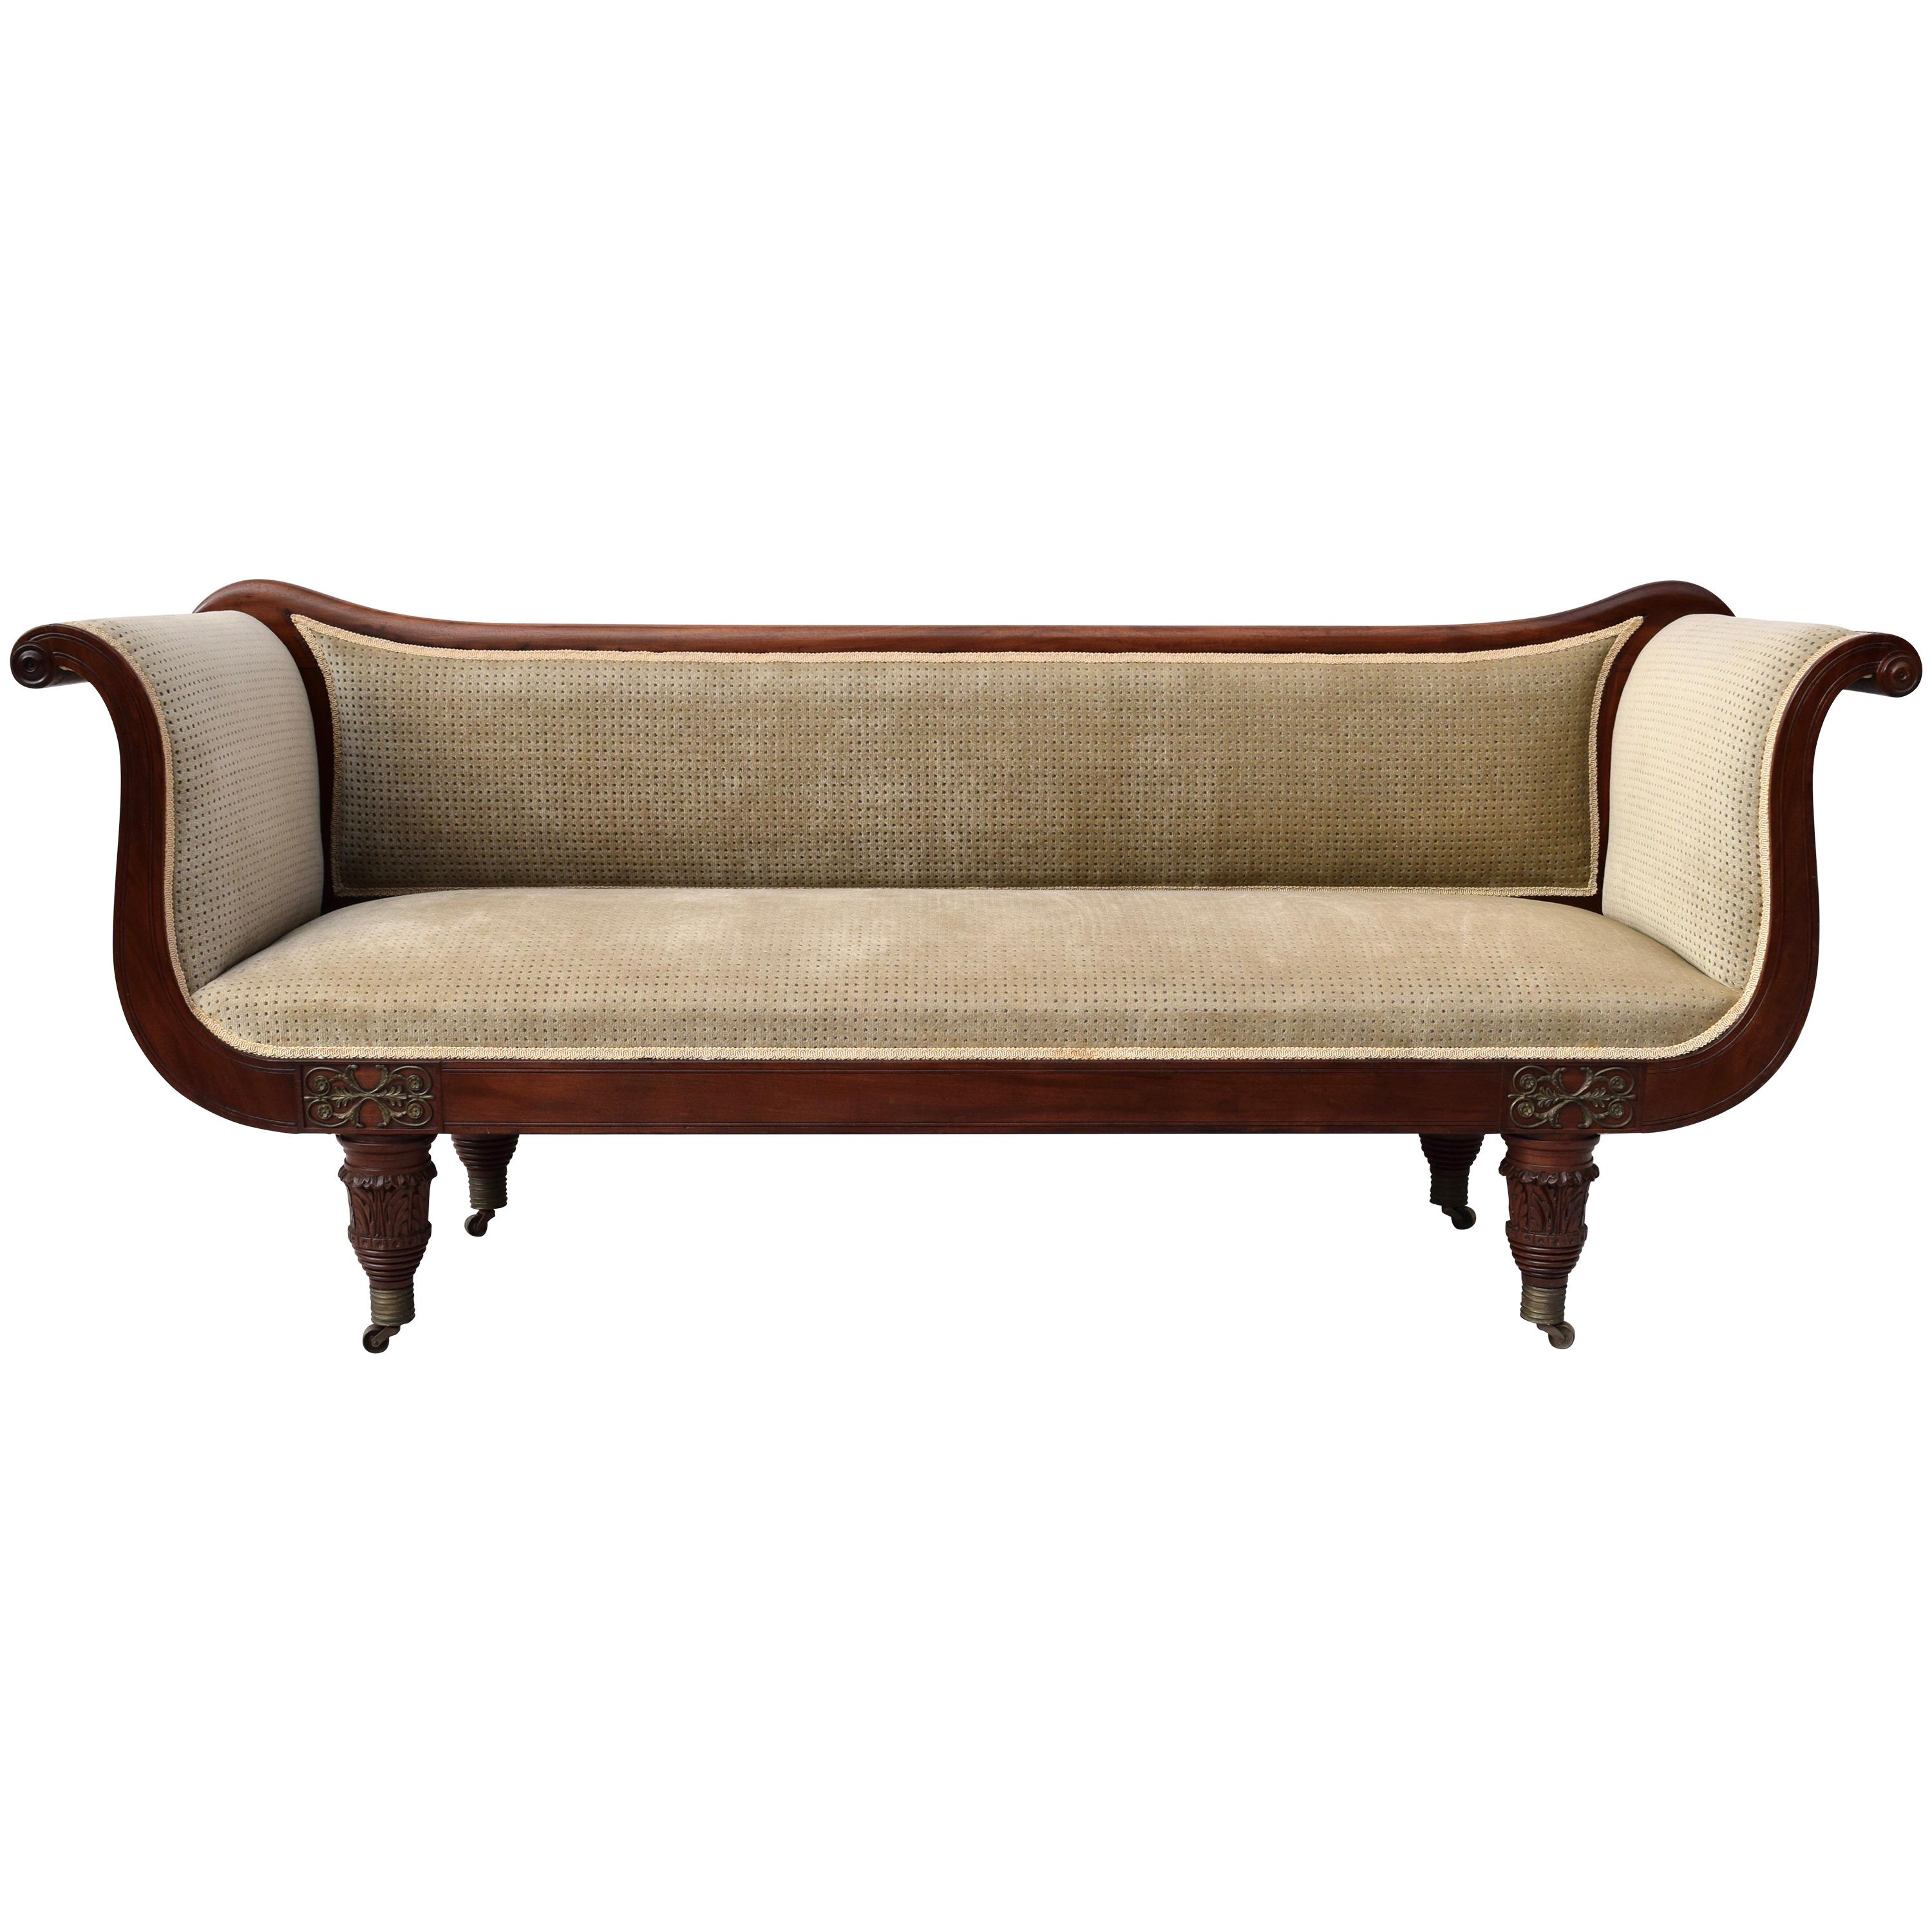 Early 19th Century Regency Mahogany Scroll Arm Sofa of Classical Form